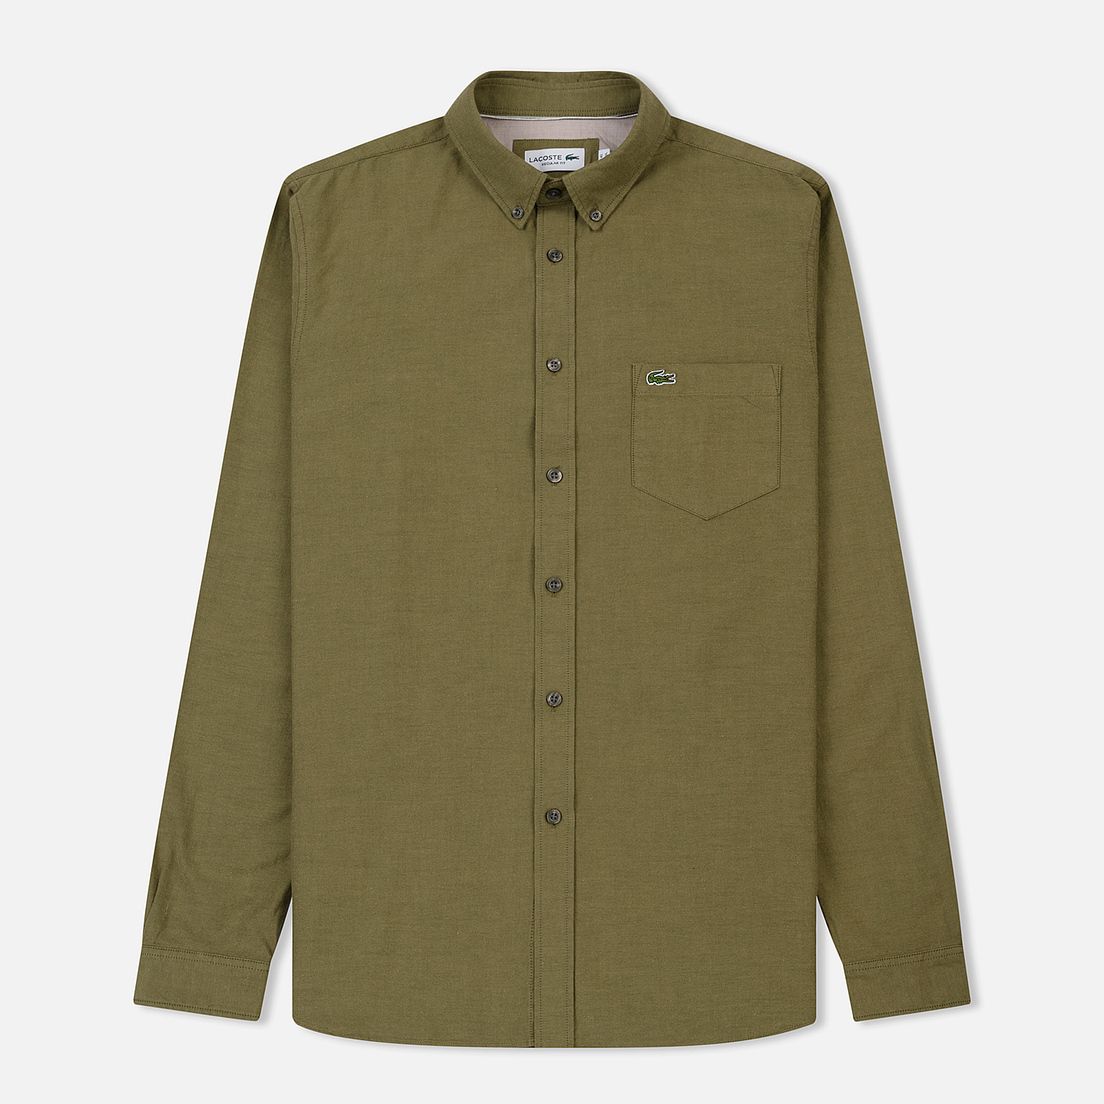  Lacoste Oxford Cotton Shirt - Khaki (Regular) 